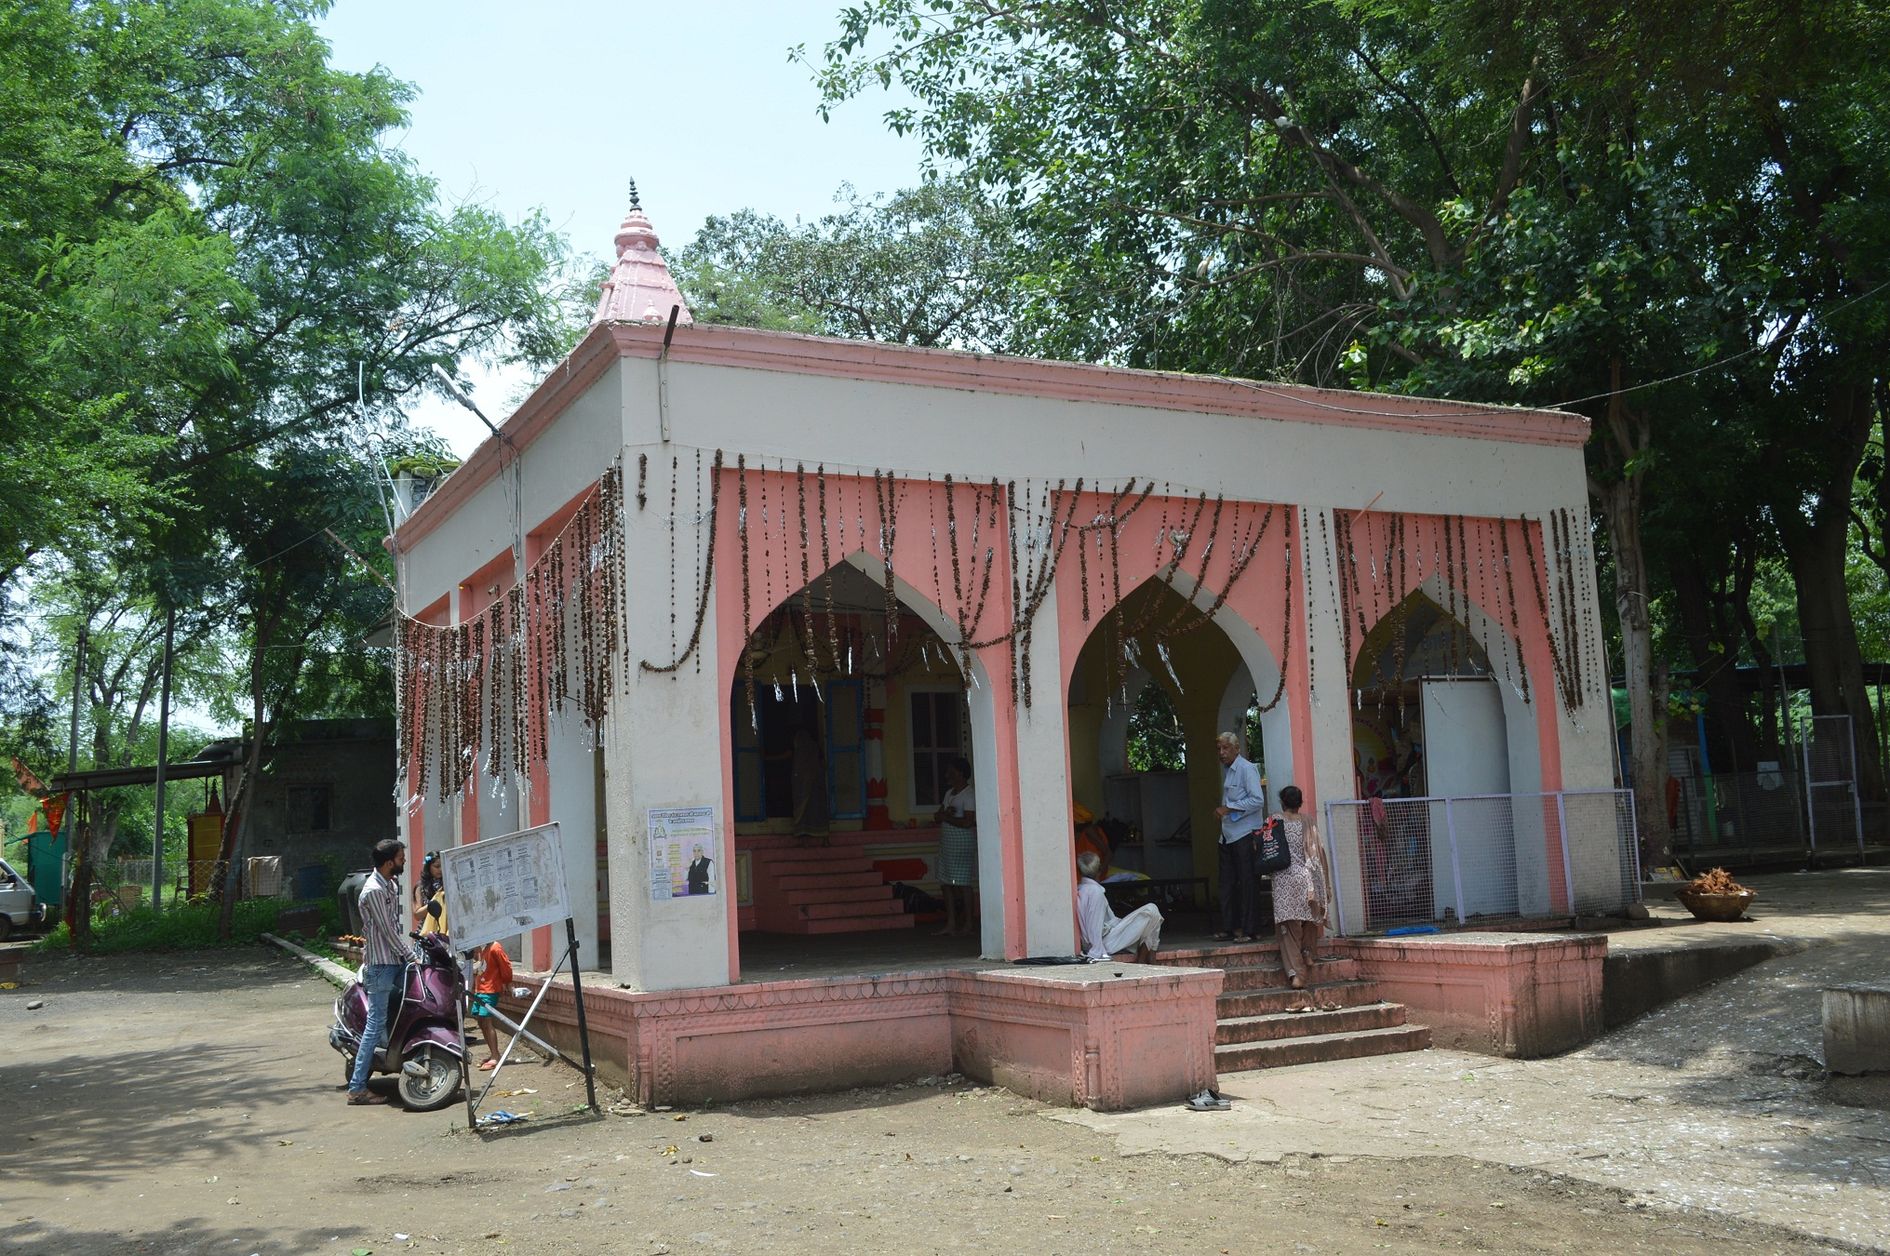 Mojeshwar Mahadev Temple at Kasrawad, Dattatray Temple at Rajghat